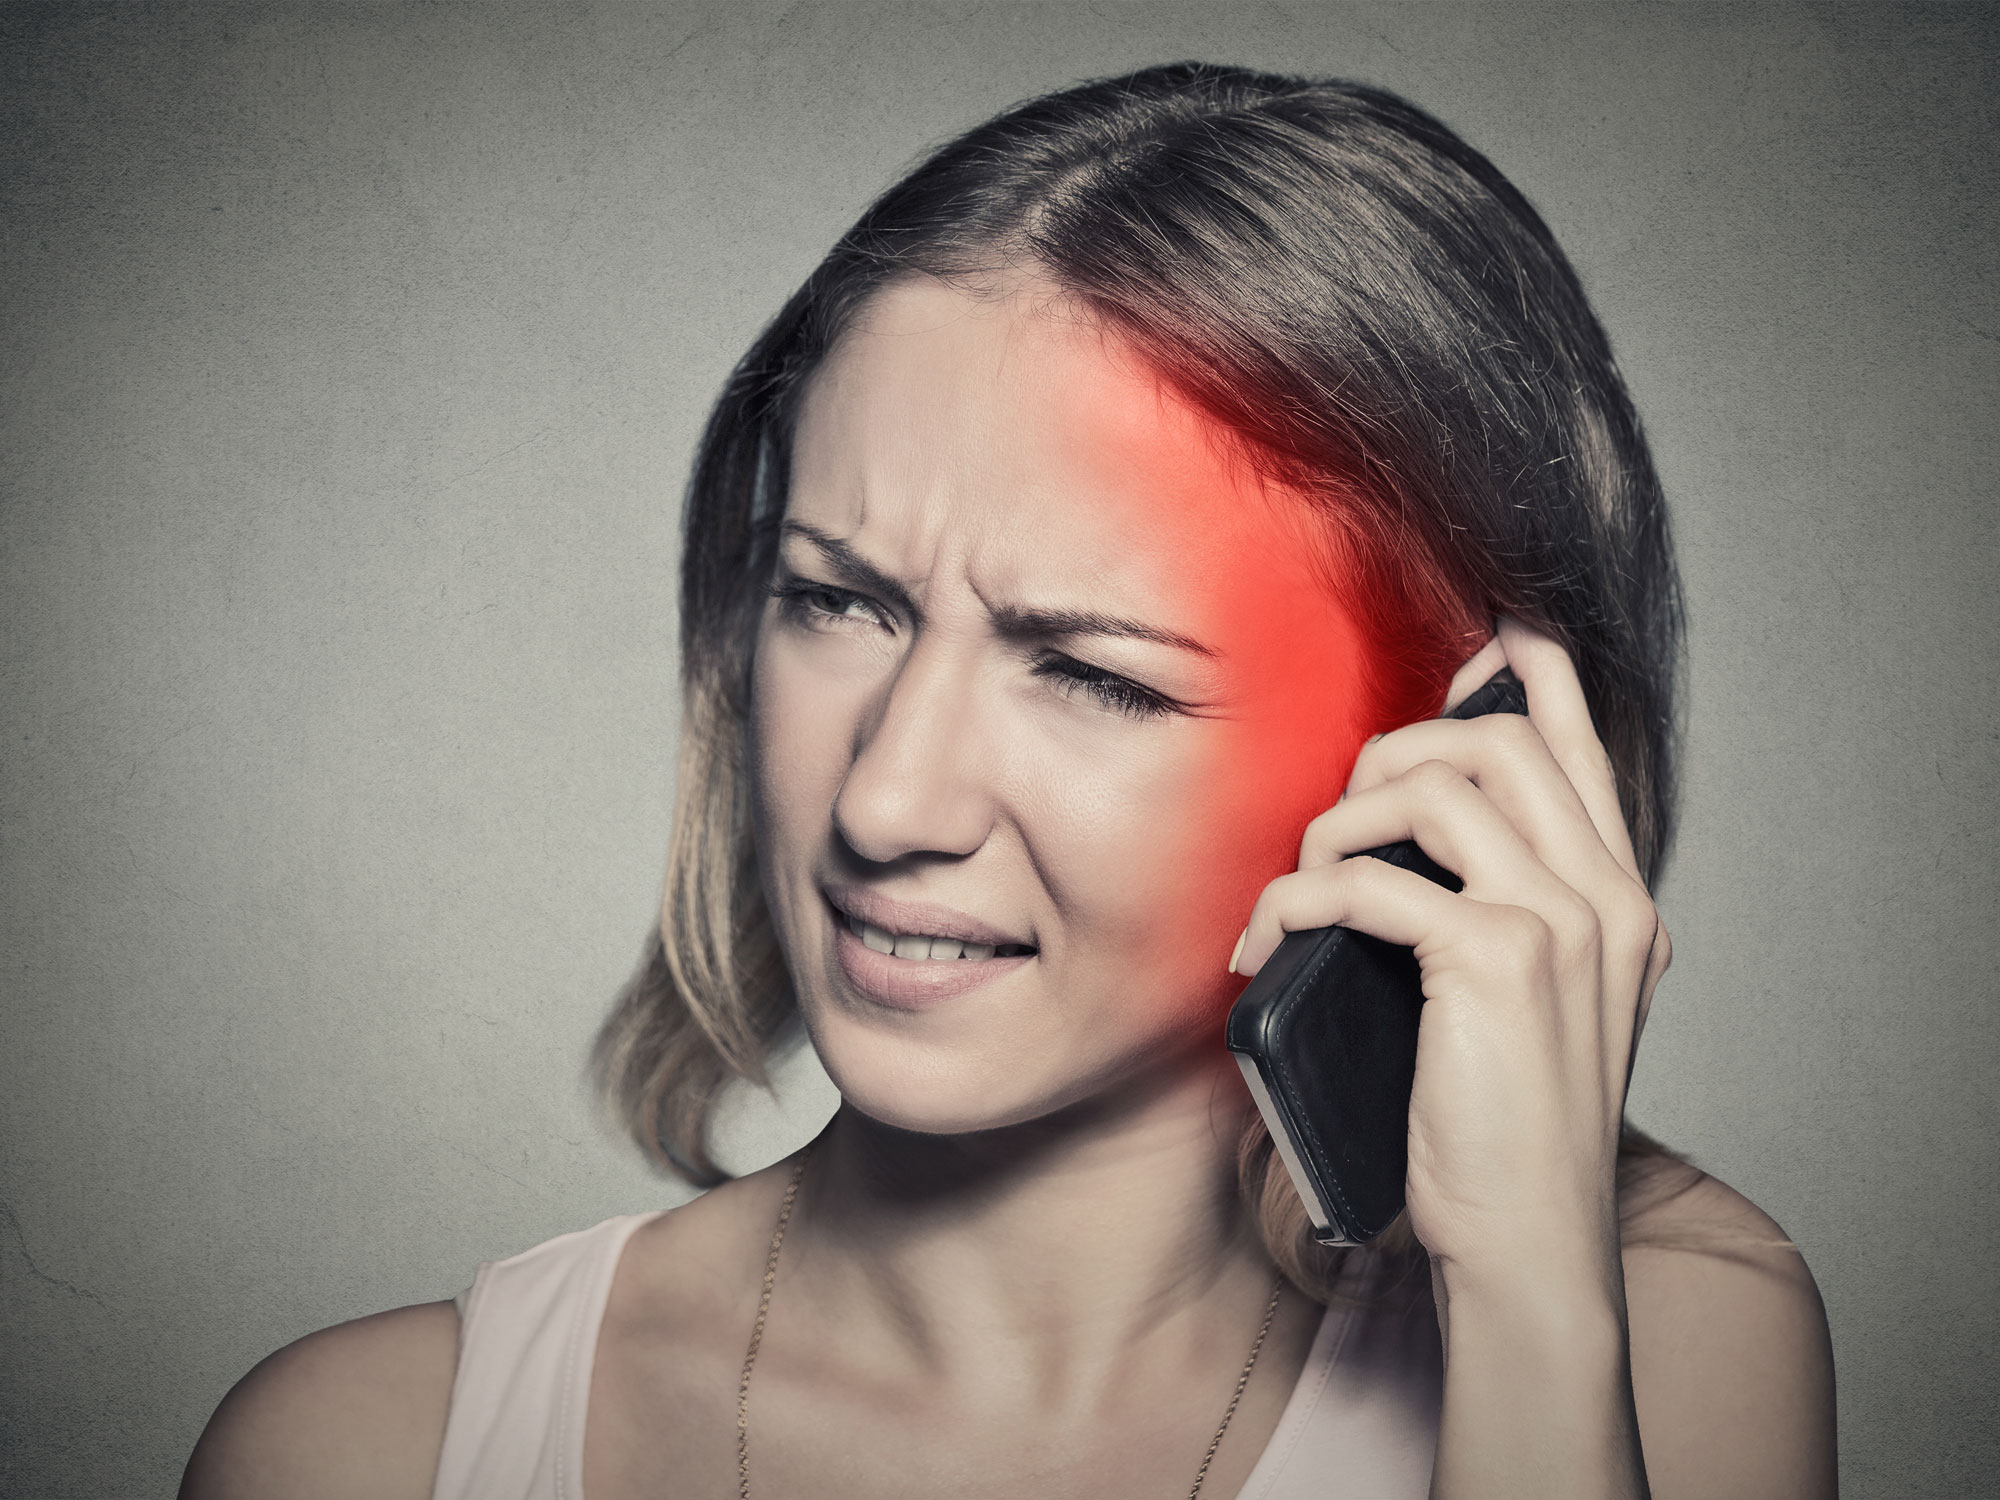 5 ways to slash cell phone radiation exposure